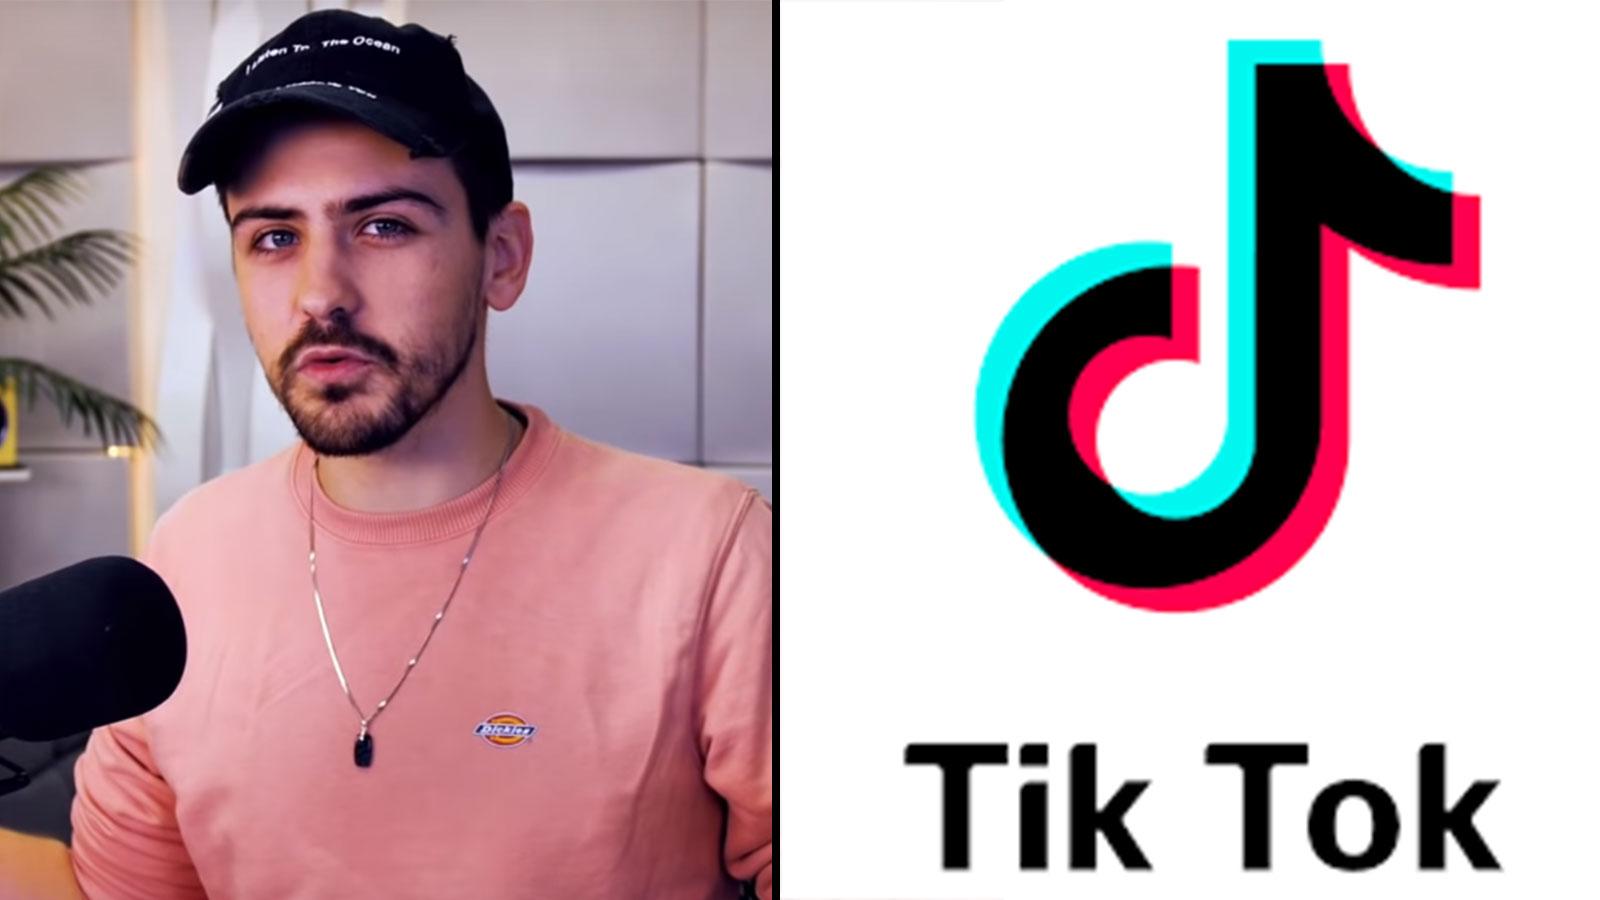 Joyca, YouTube / TikTok